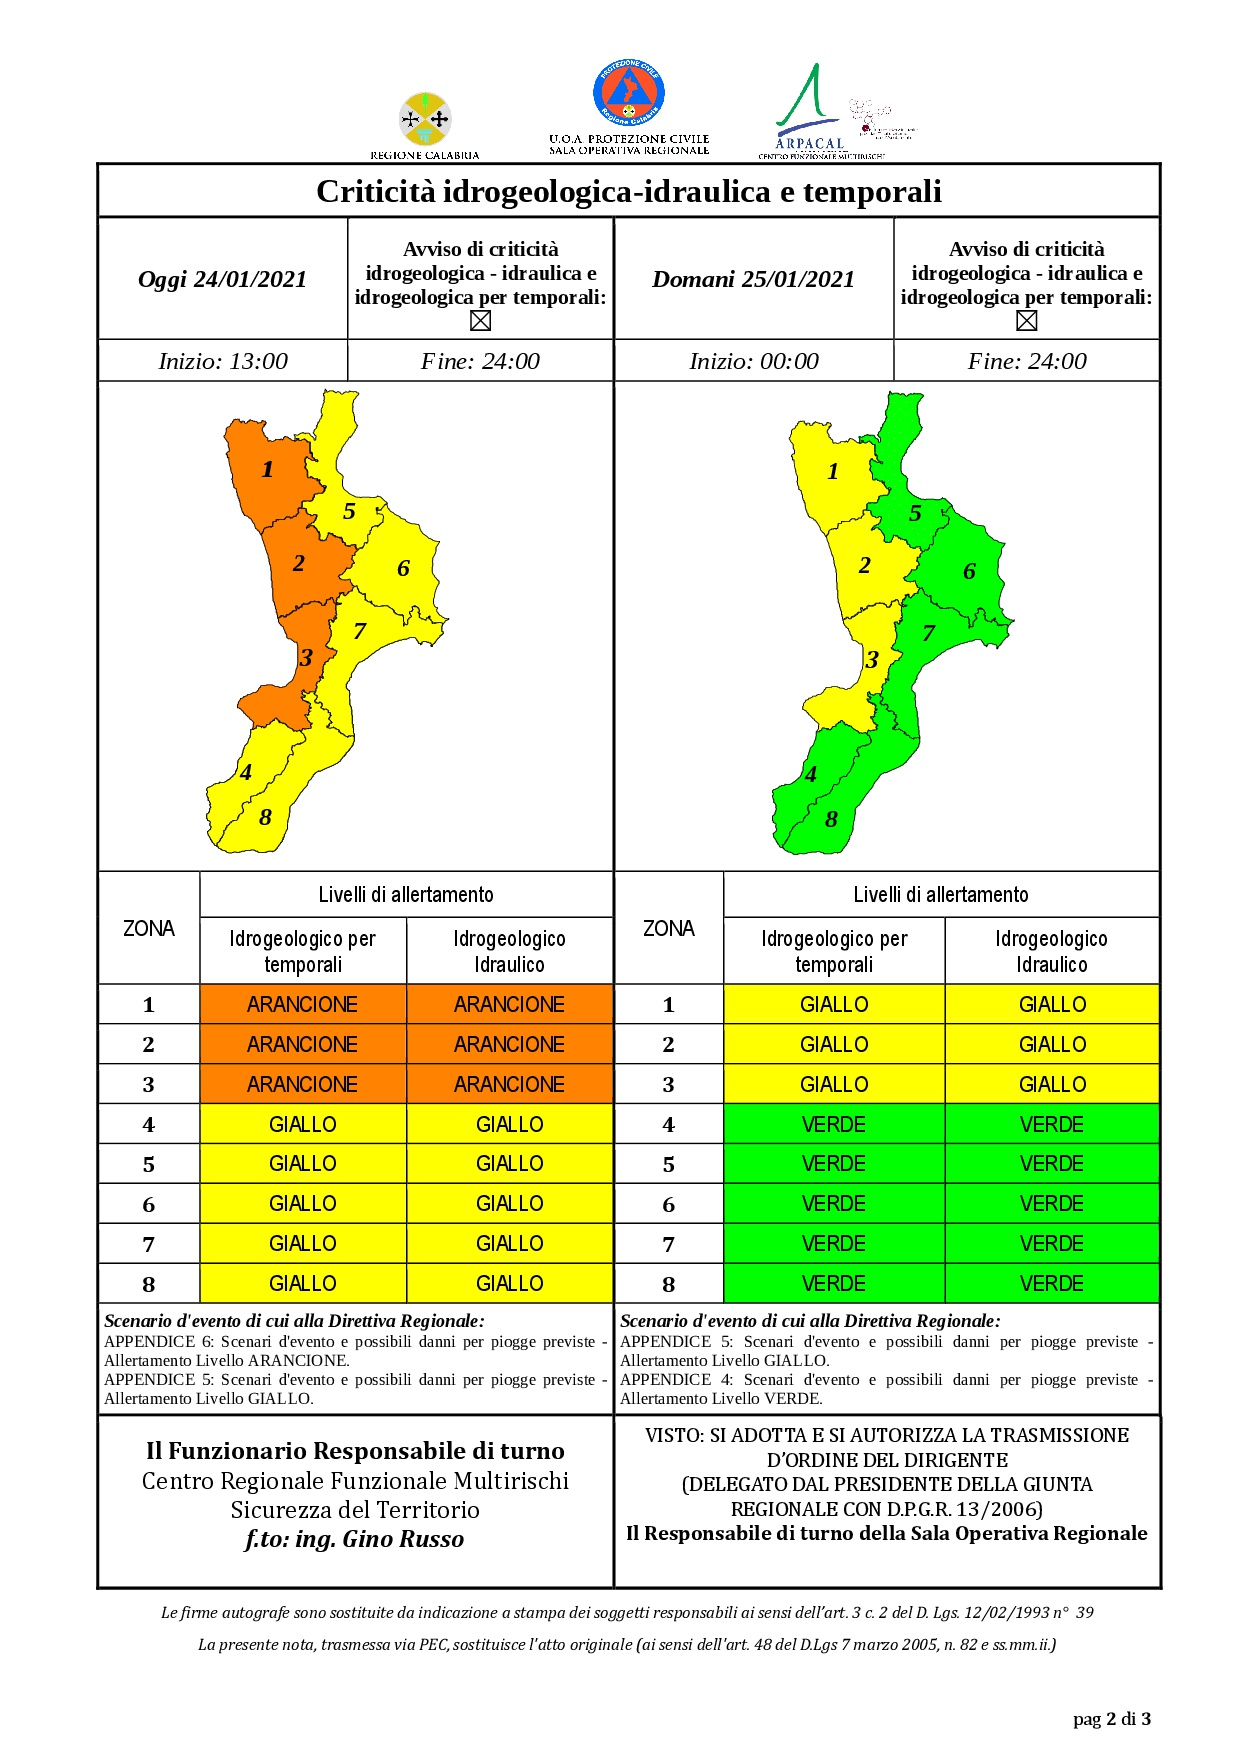 Criticità idrogeologica-idraulica e temporali in Calabria 24-01-2021